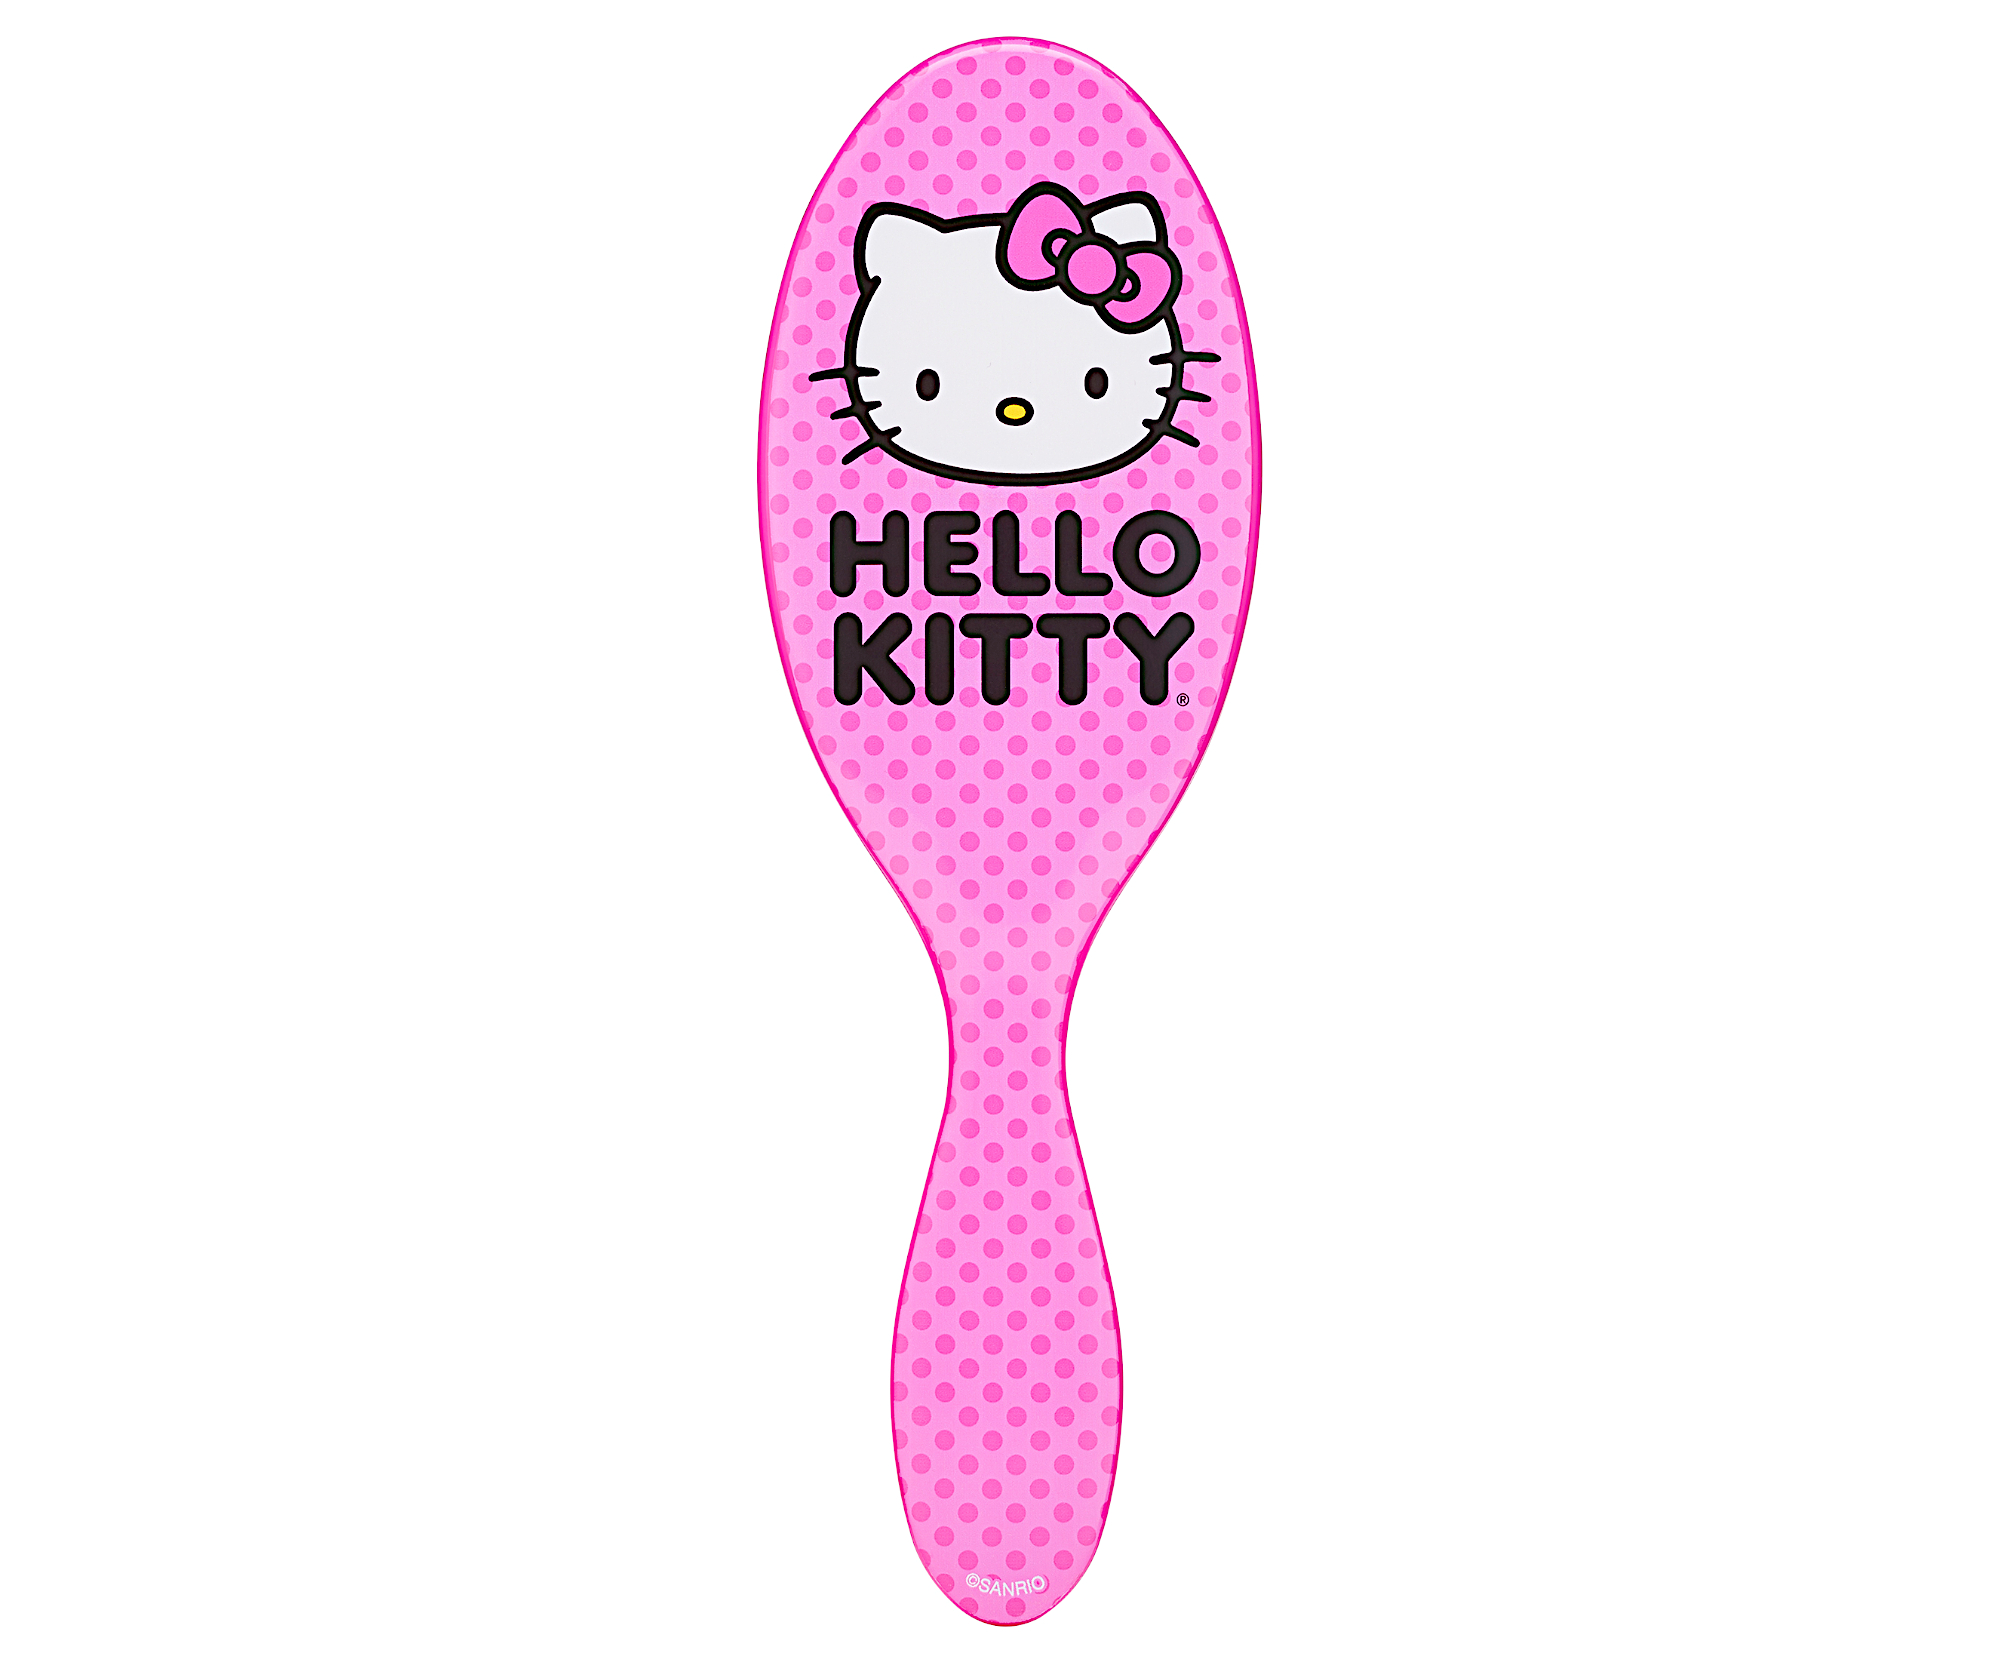 Kartáč na rozčesávání vlasů Wet Brush Original Detangler Hello Kitty - růžový (0217280) + dárek zdarma